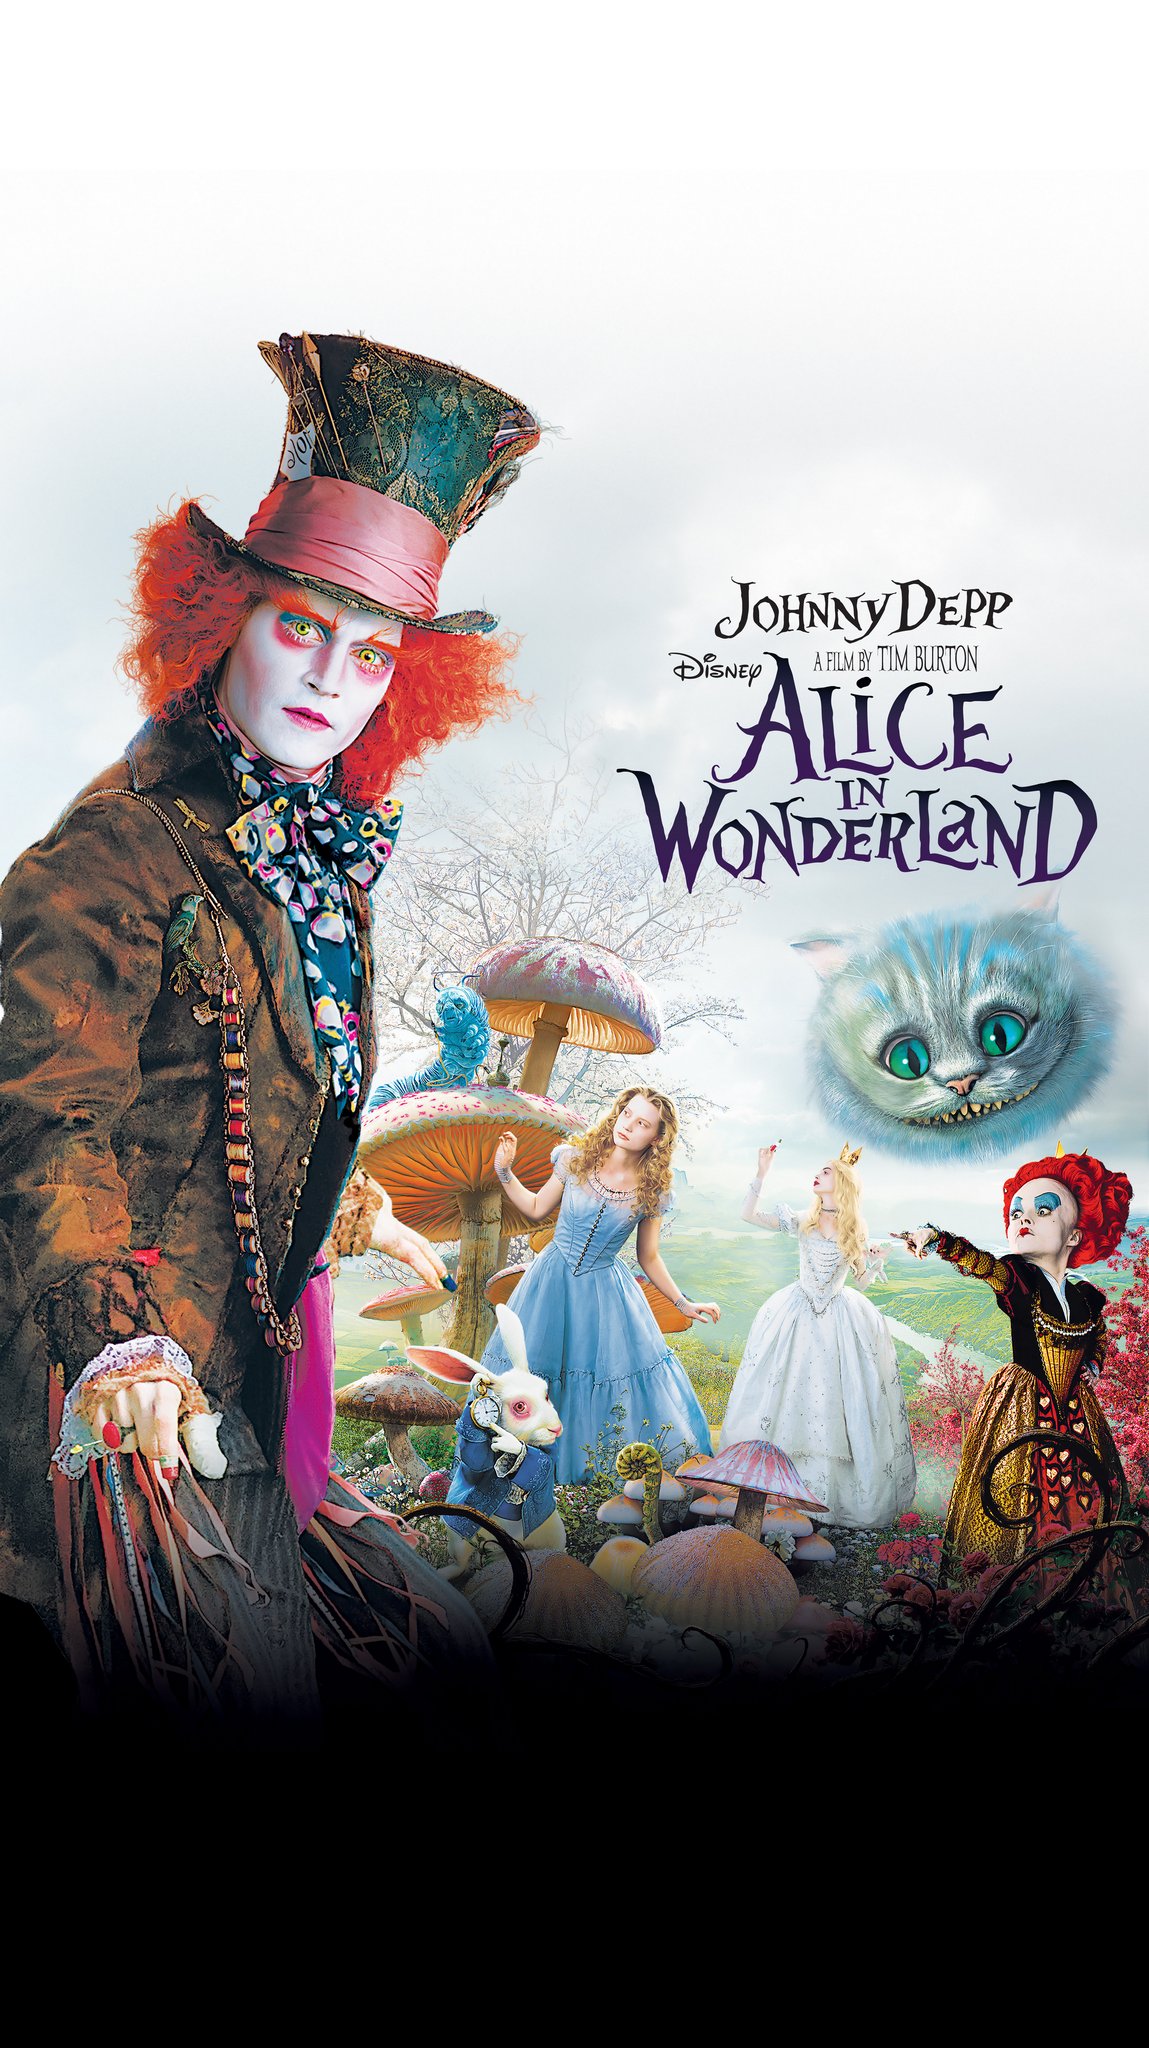 Alice in Wonderland - Alice in Wonderland (2010) Photo (26987815 ...